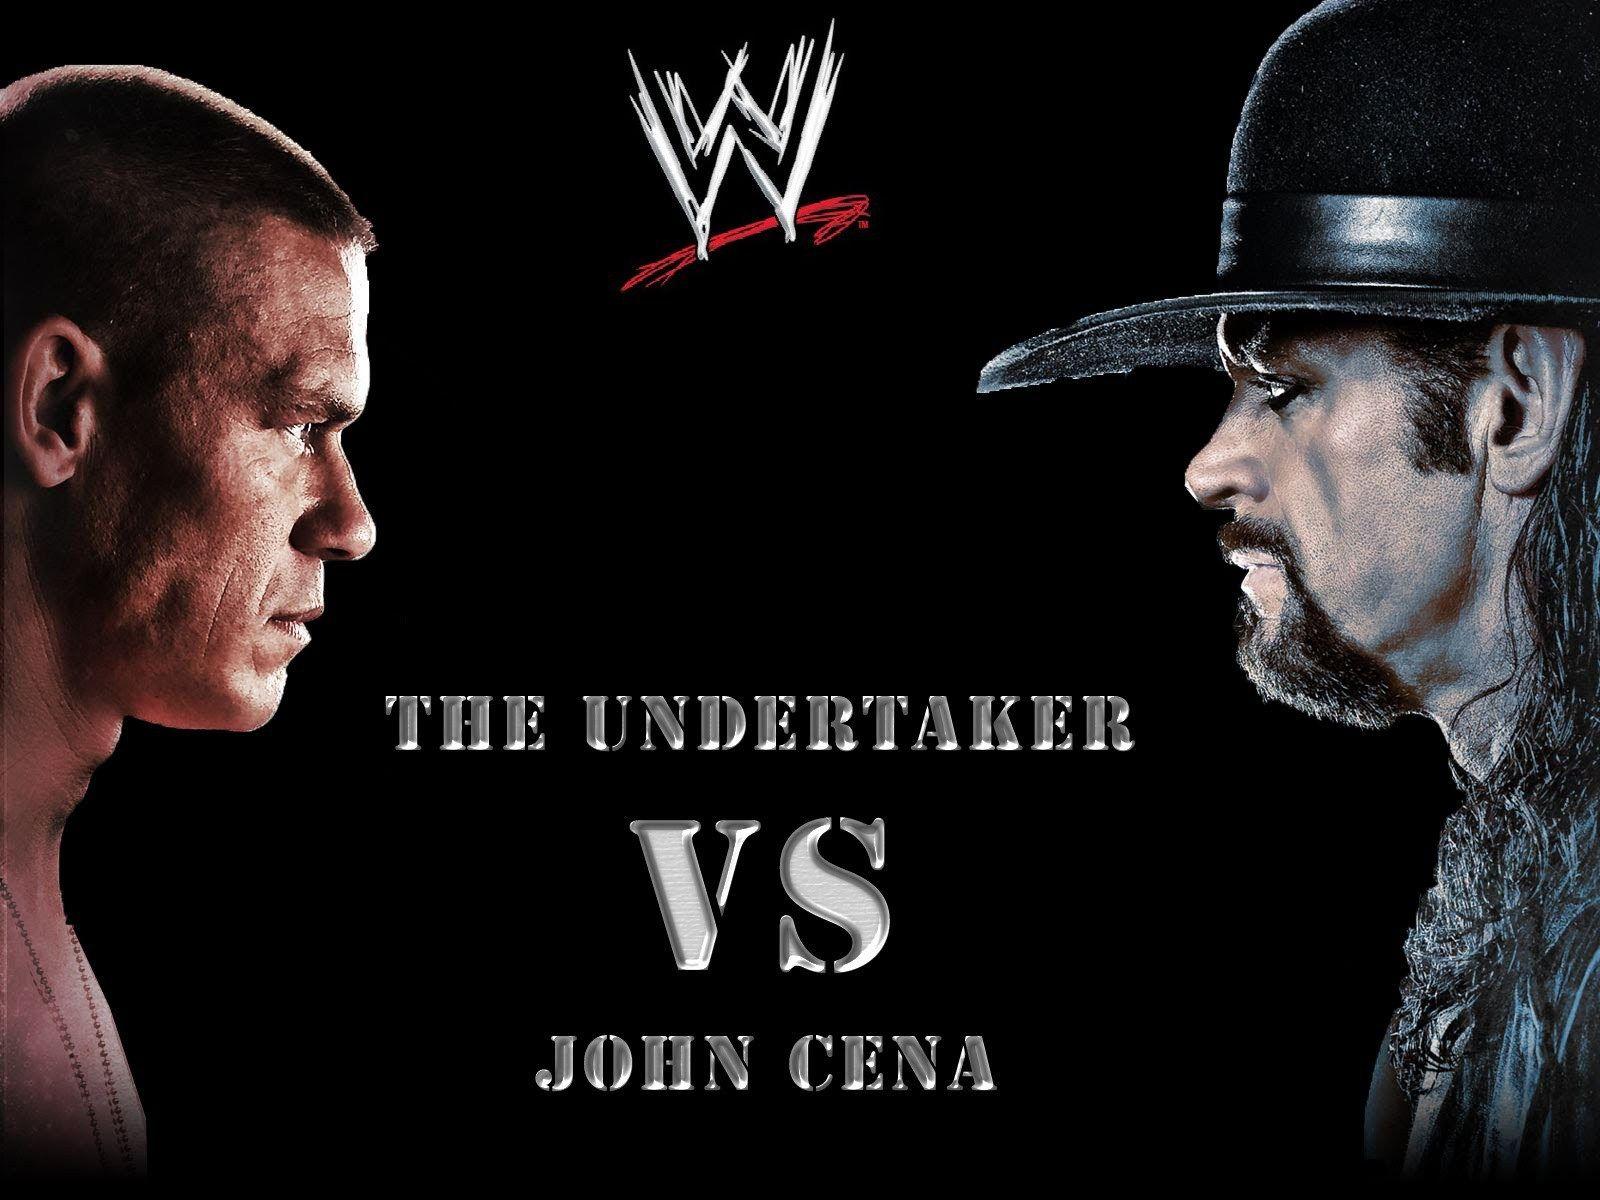 undertaker and john cena wallpaper